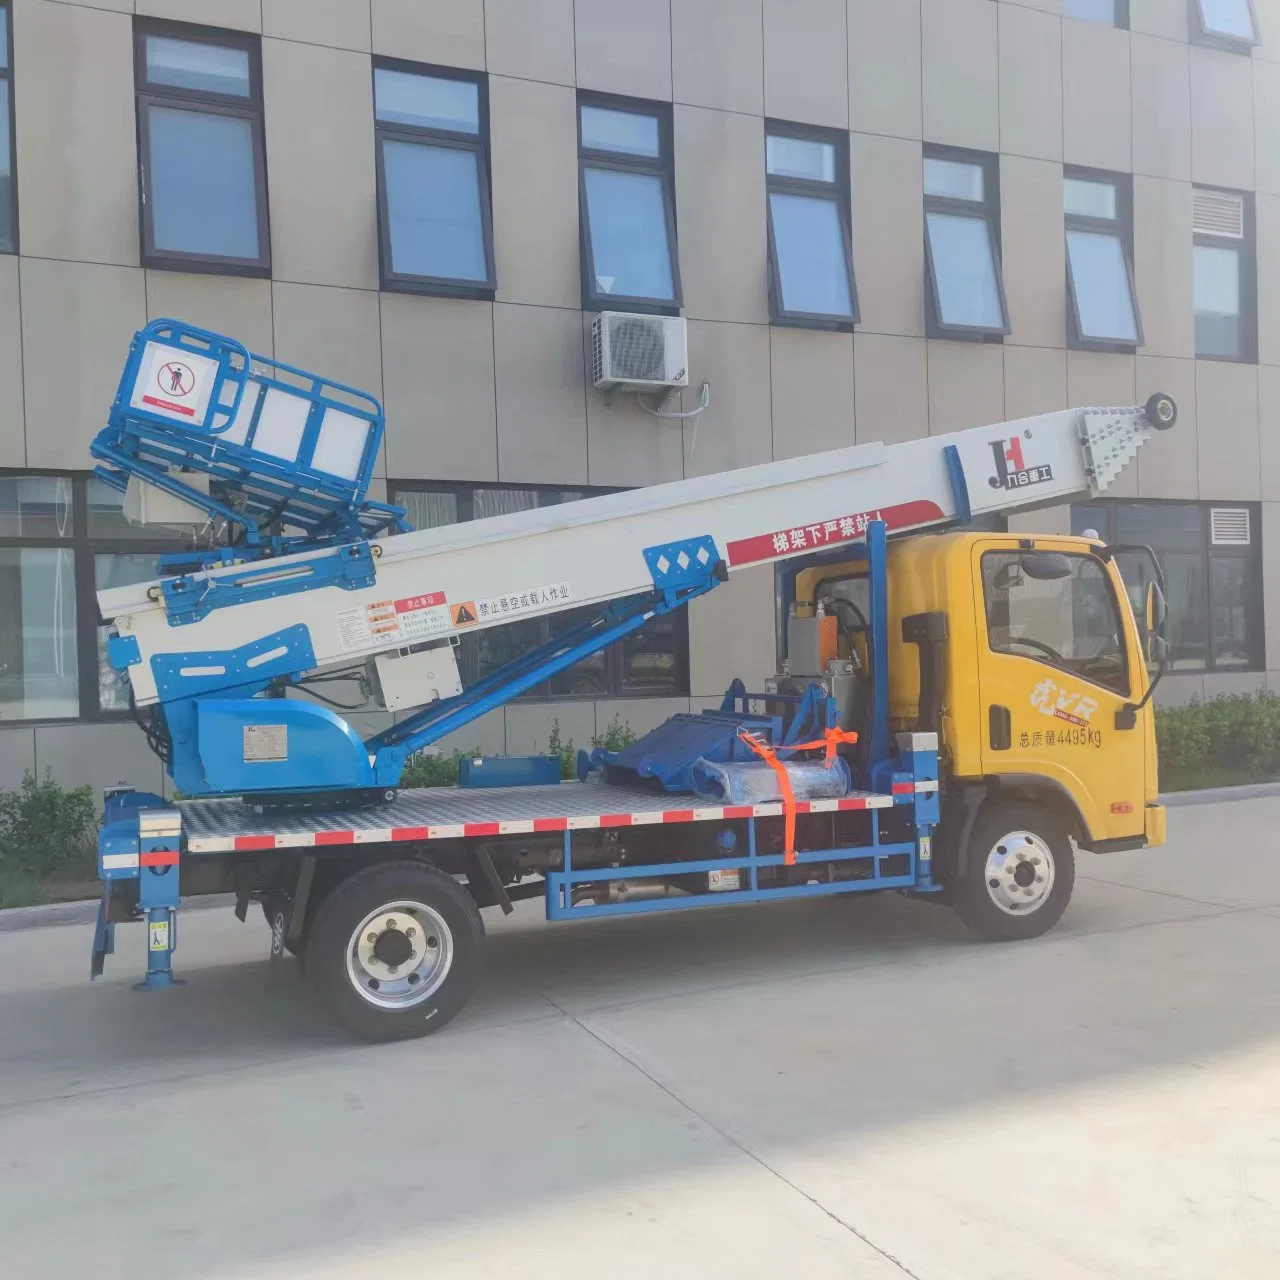 32m 36m Construction Lift Ladder Platform Hoist Ladder Lift Truck for High Altitude Operation with CE